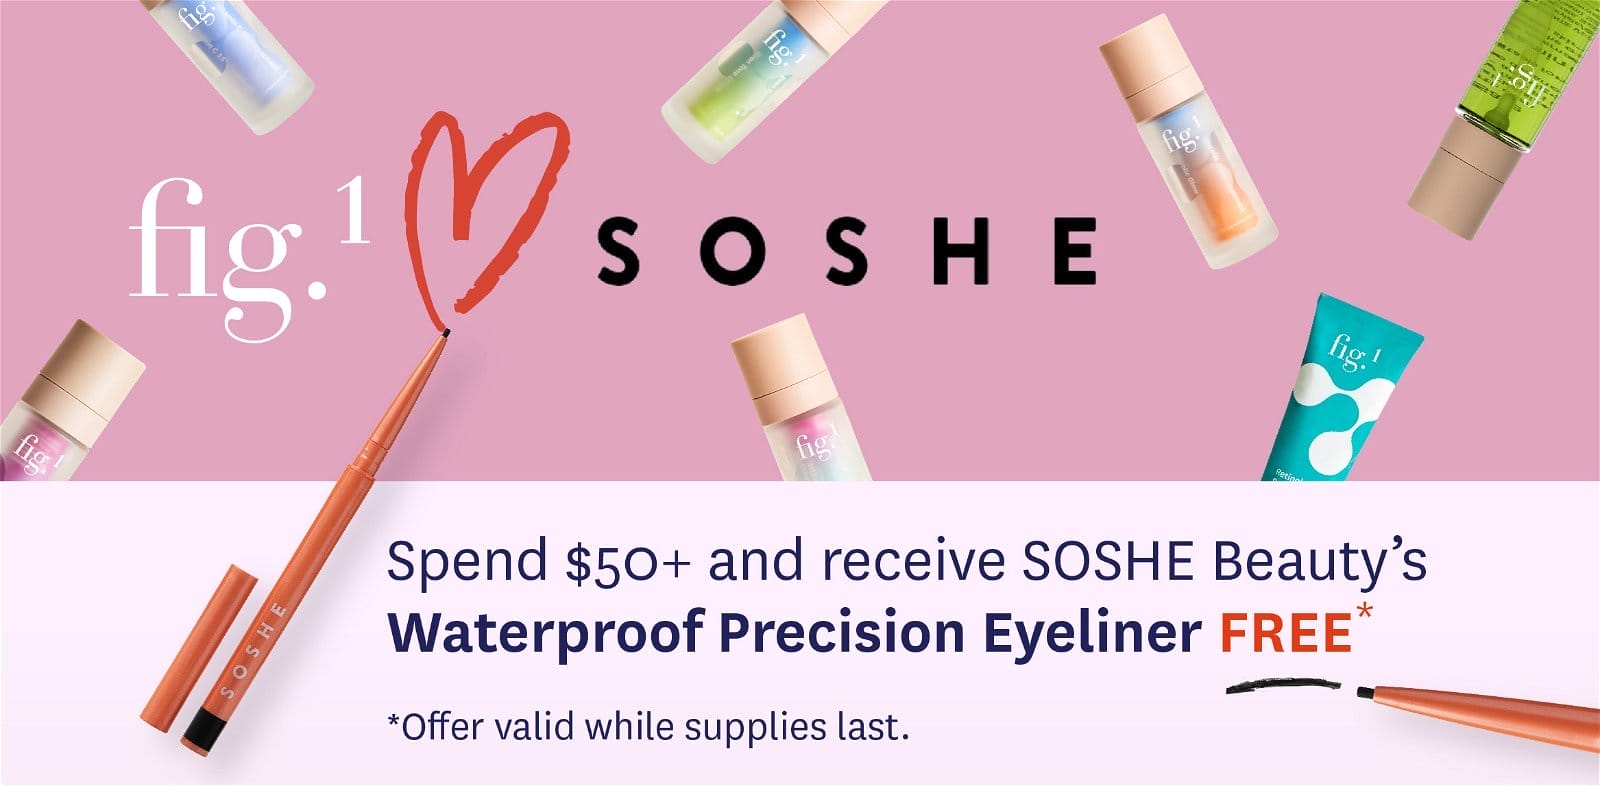 fig.1 x SOSHE Spend \\$50+ and get SOSHE Beauty's Waterproof Precision Eyeliner FREE*